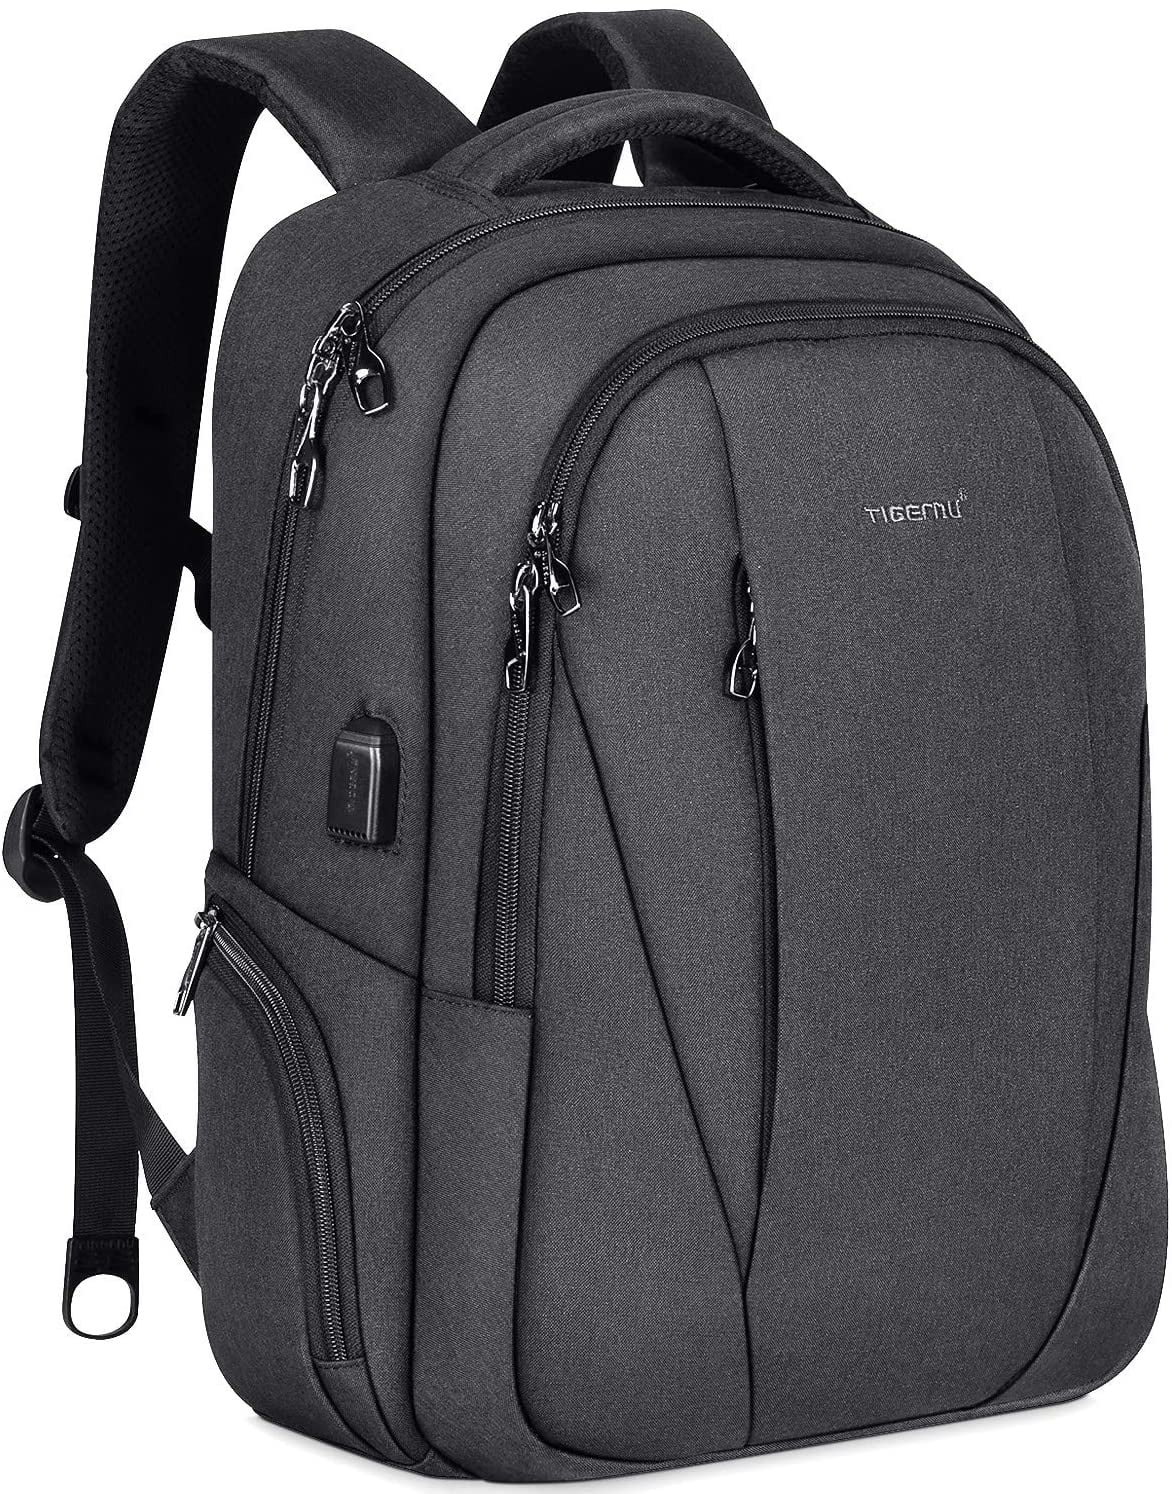 Make America Love Agian Sporty Waterproof Backpack With Usb Charging/Headphone Port Laptop Bag For School Travel Work